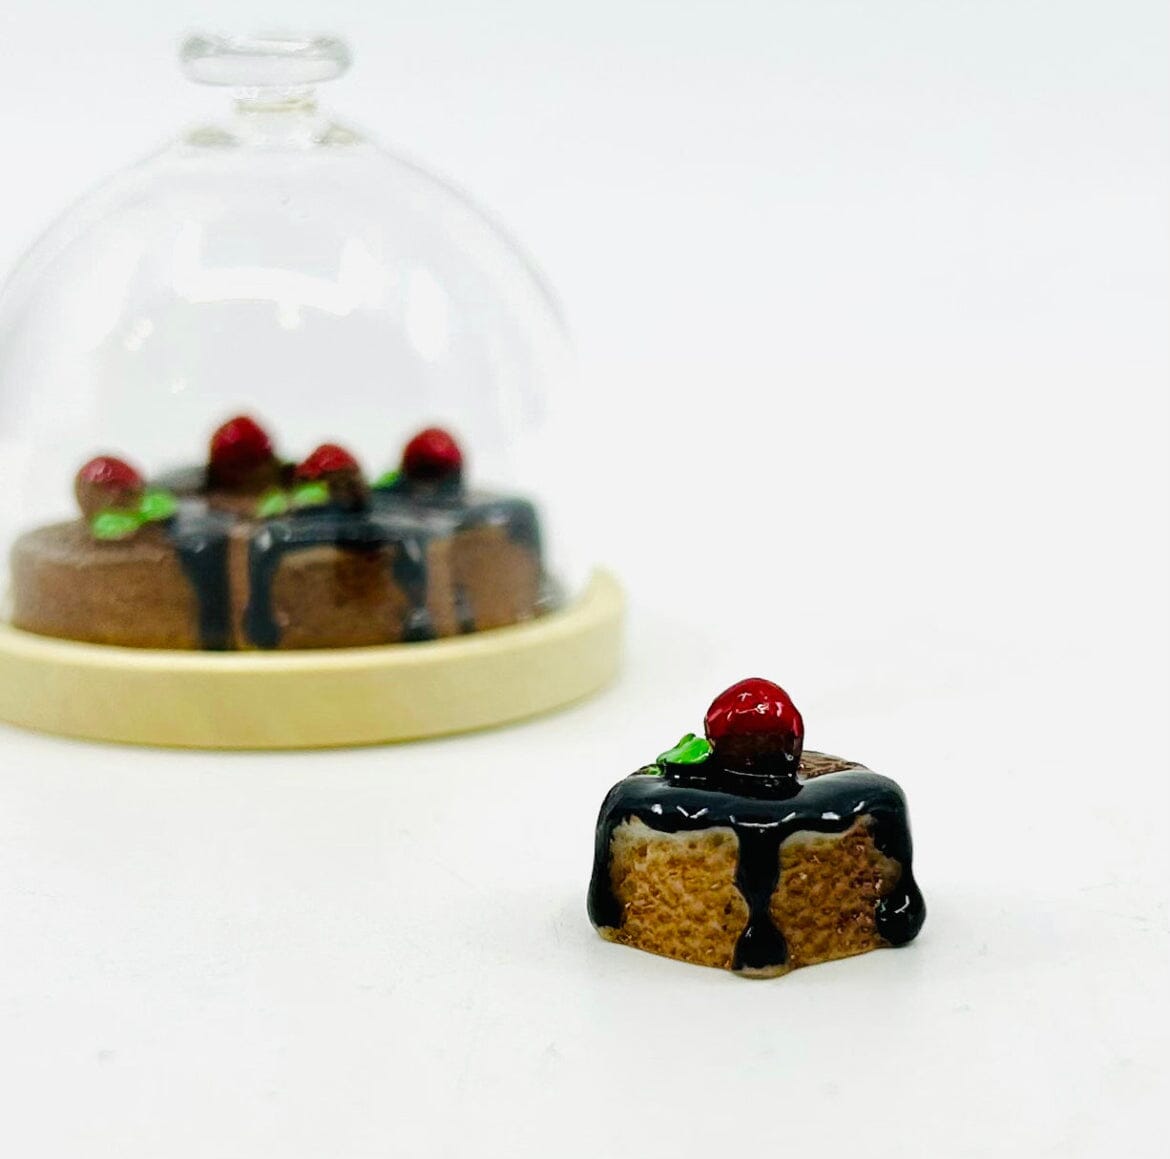 Tiniest Sweet Treats Miniature - Chocolate Pastry 